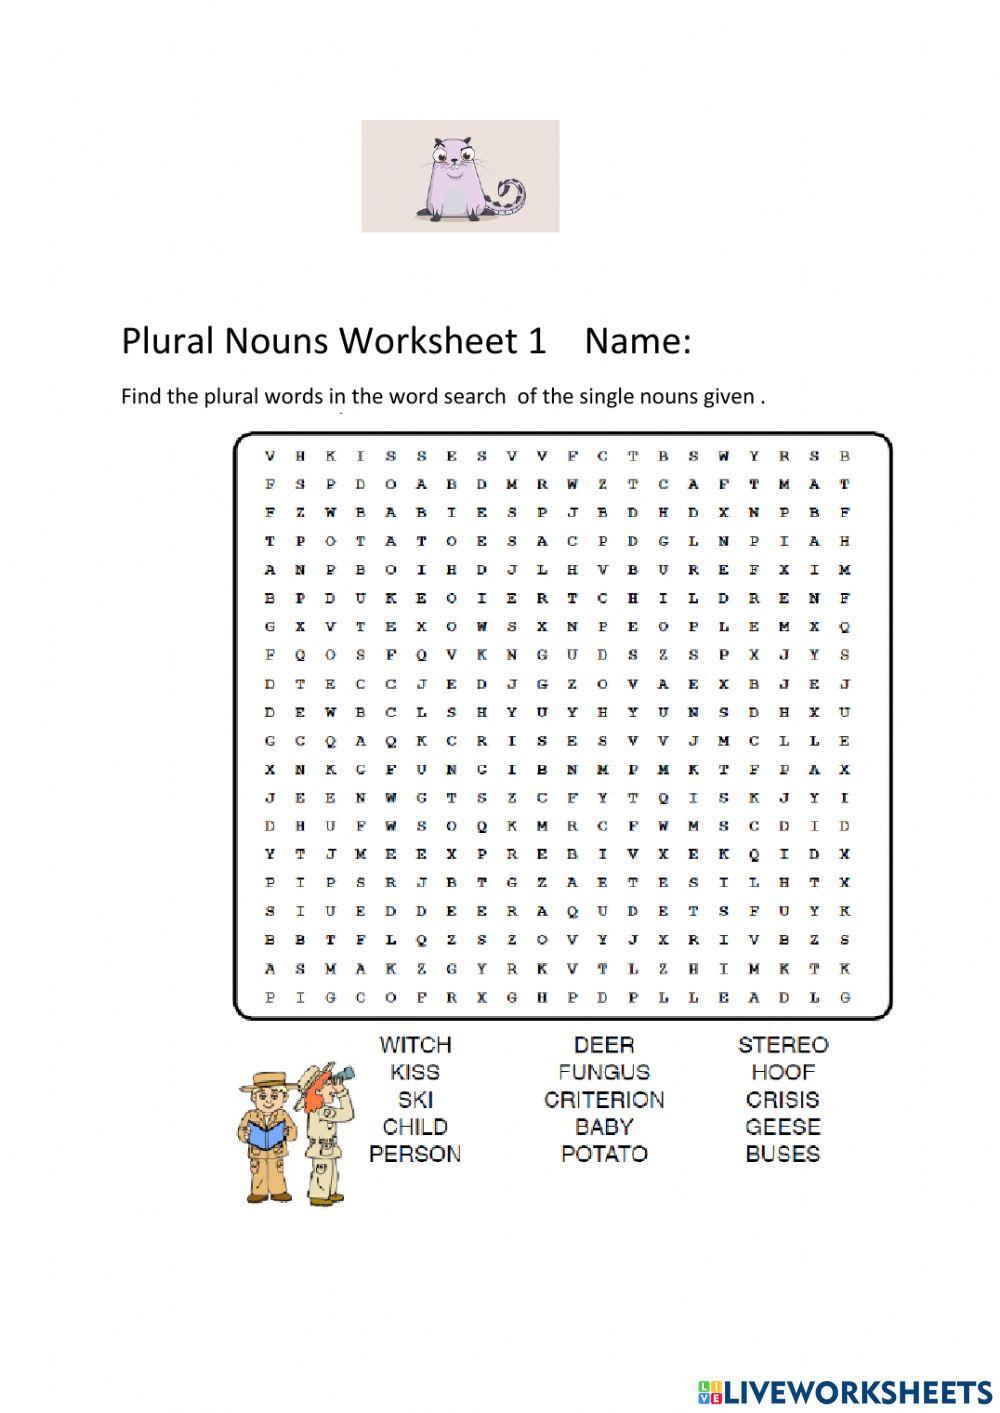 Plural Nouns Worksheet 1